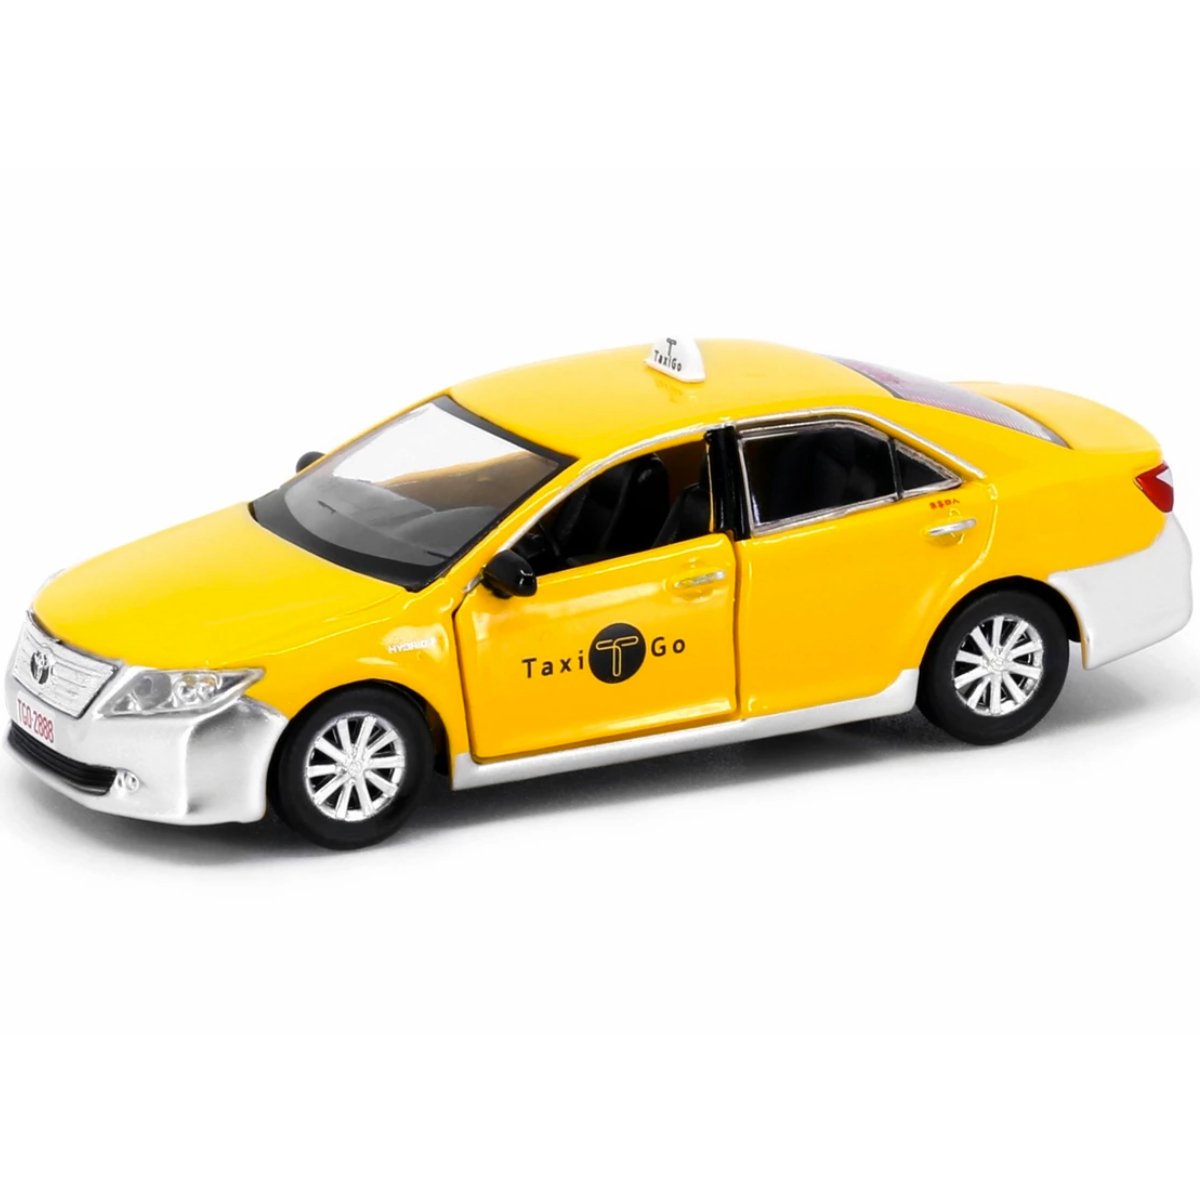 Tiny Models Toyota Camry 2011 TaxiGo (1:64 Scale) - Phillips Hobbies